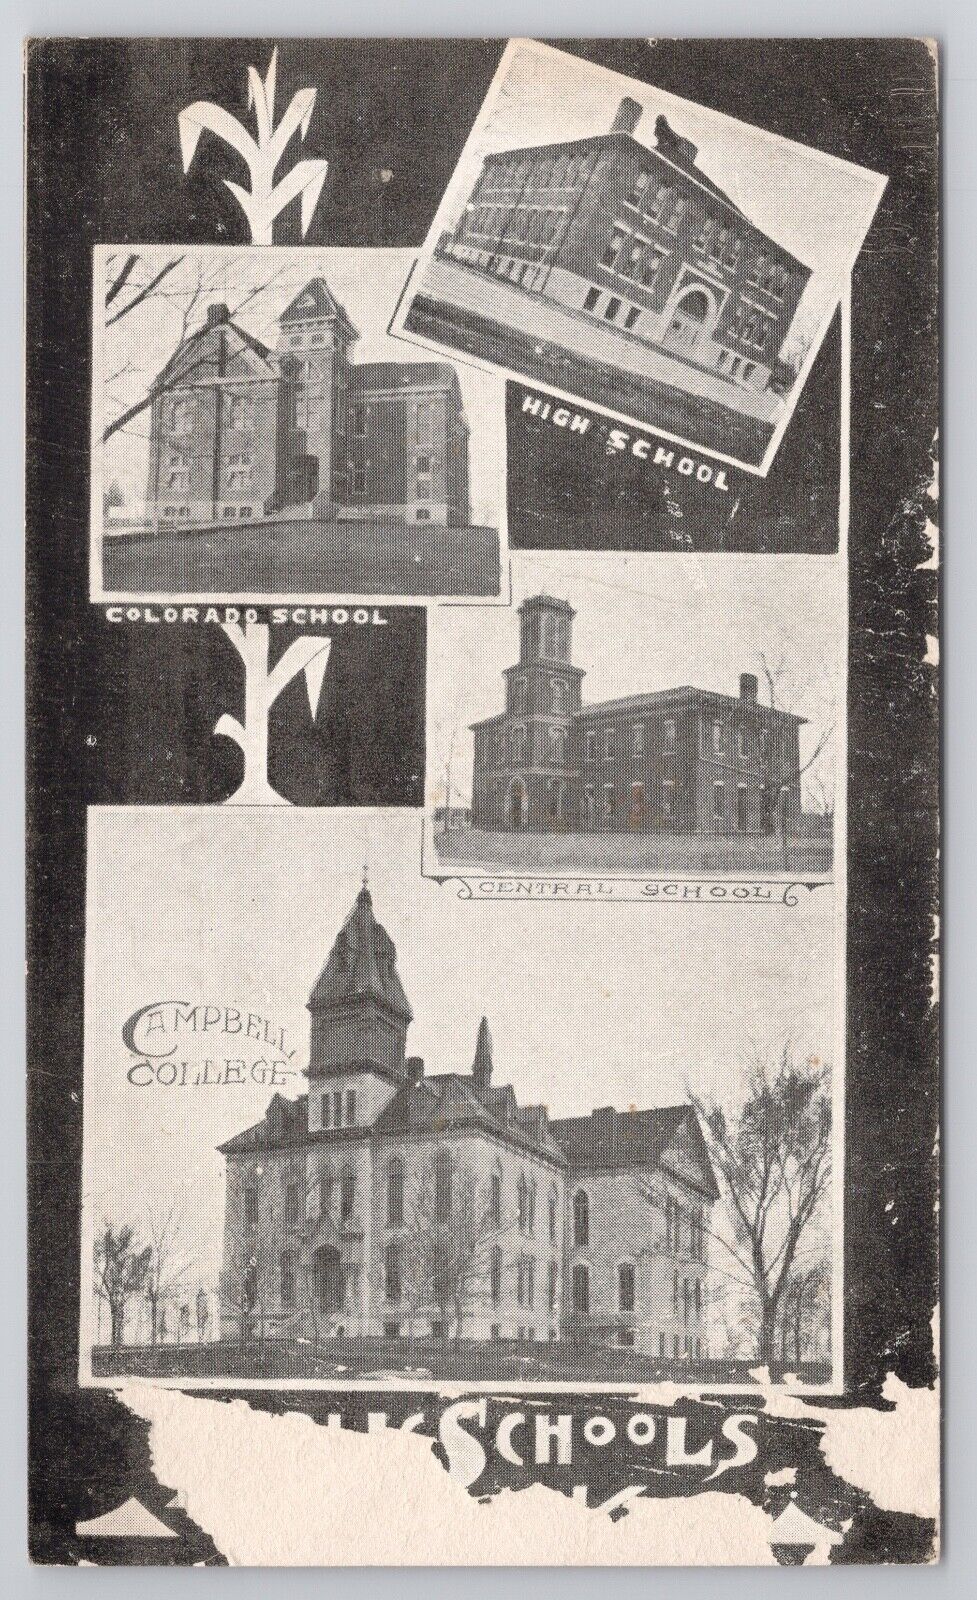 SCHOOL BUILDINGS IN HOLTON KANSAS, MULTI-VIEW POSTCARD, JACKSON COUNTY KS c 1911